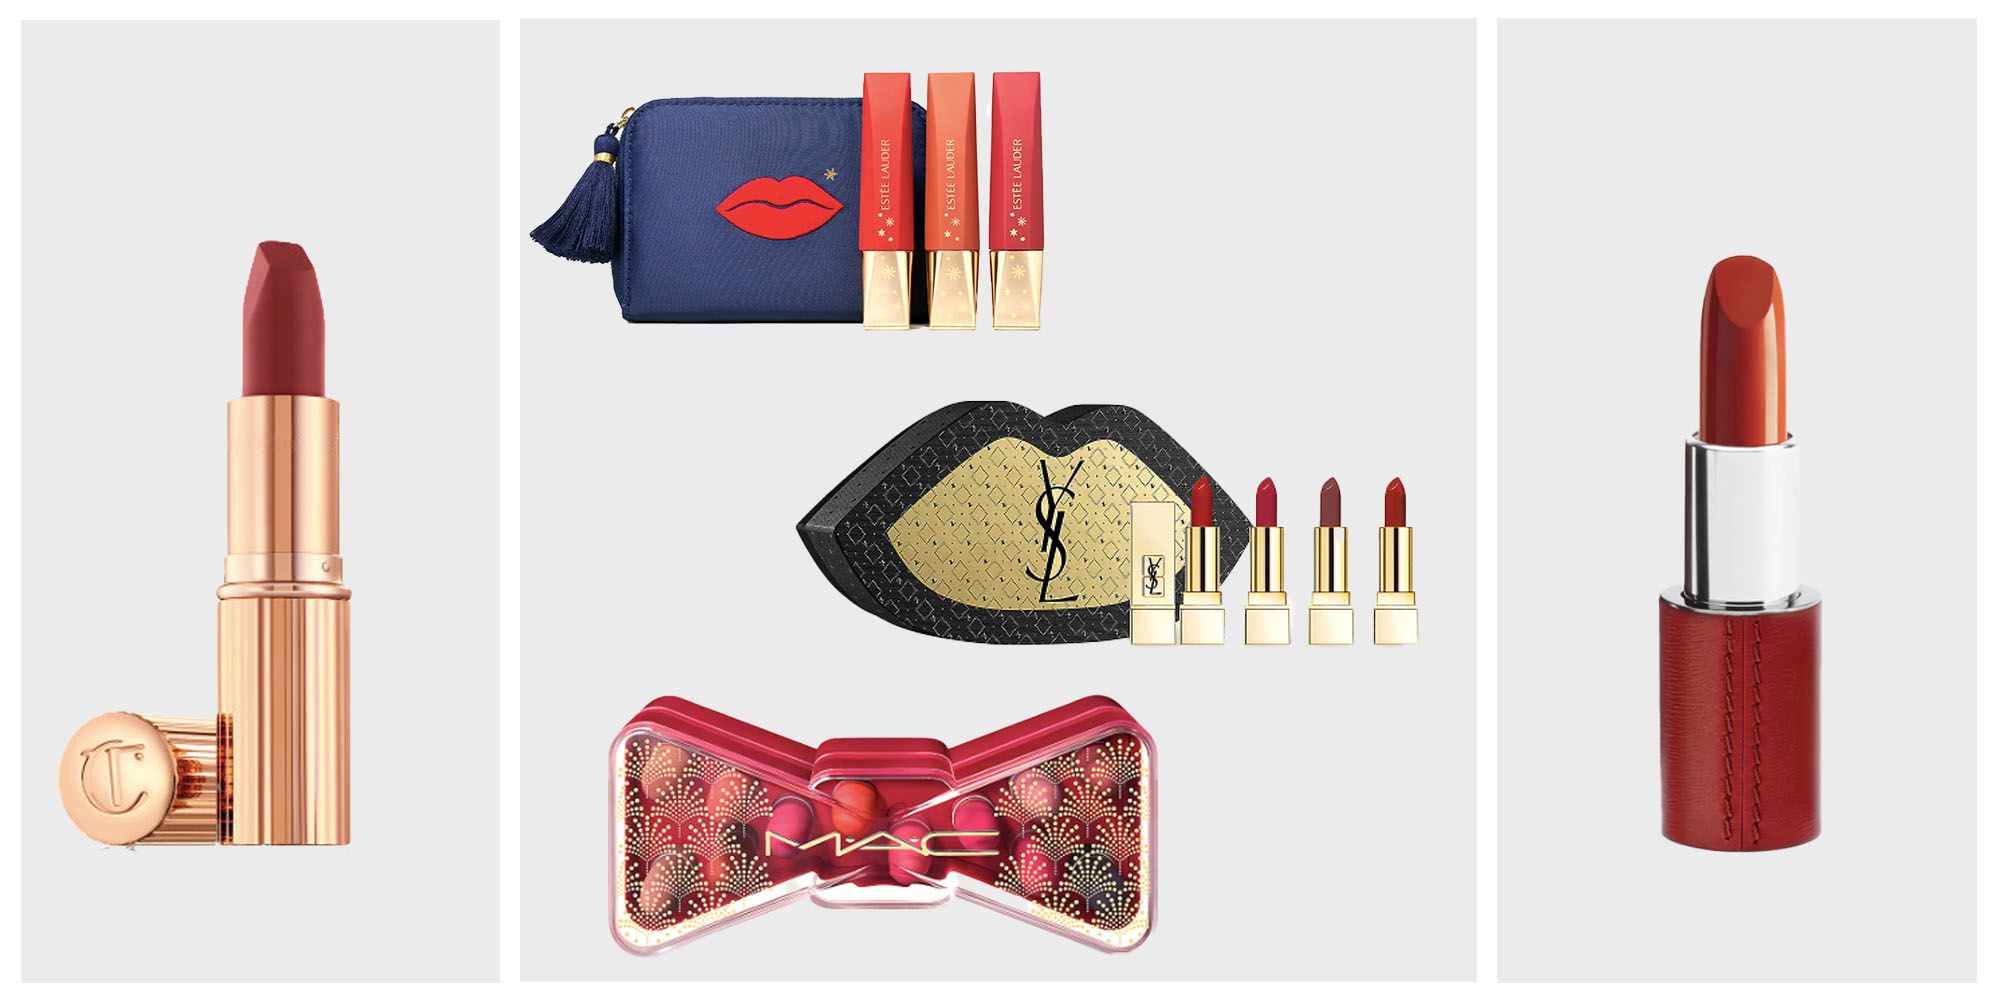 Dior Gift set inc Serum Miss Dior EDP 5ml and Rouge Dior Lipstick shade 999   eBay